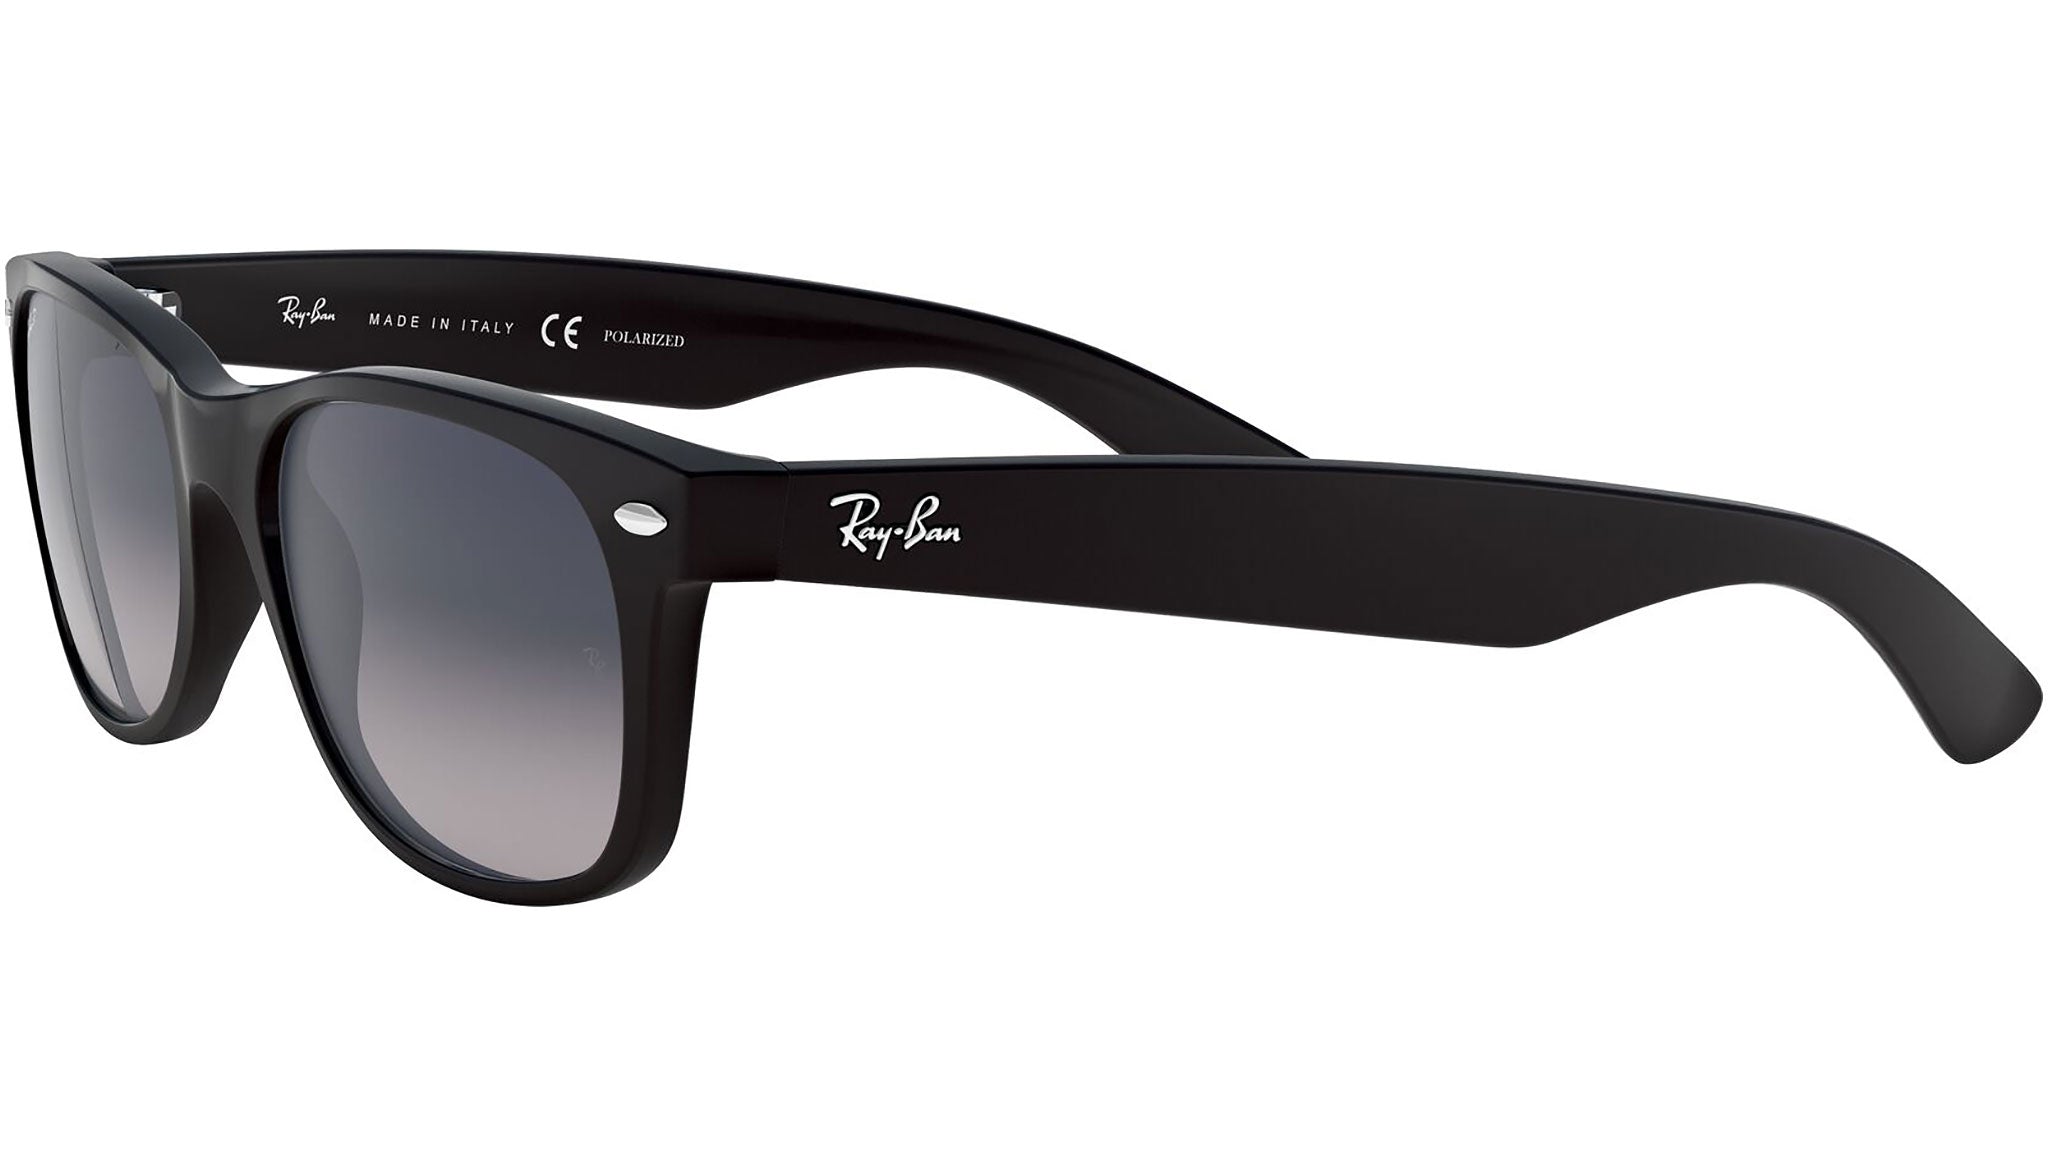 Wayfarer New Ray-Ban Sunglasses 601S78 Black RB2132